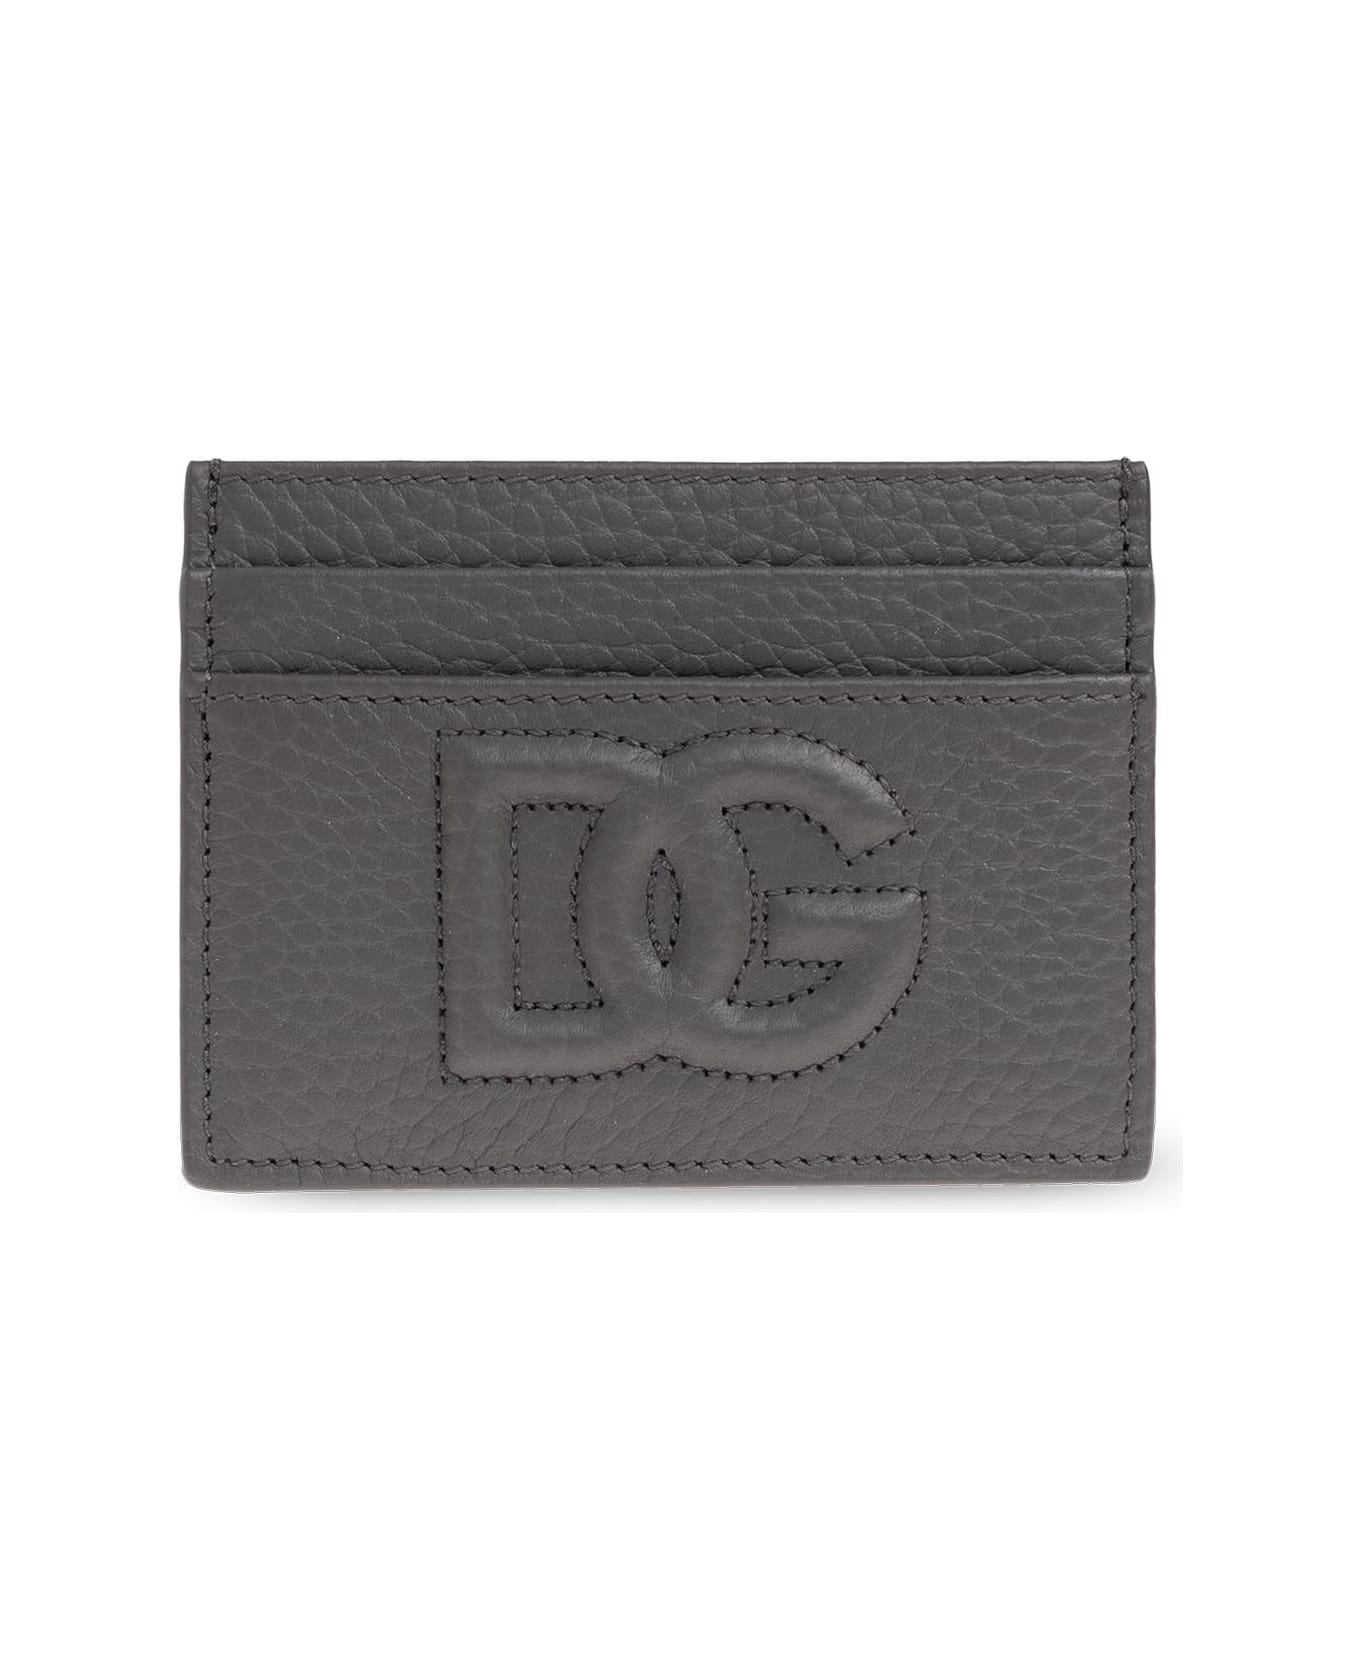 Dolce & Gabbana Card Case With Logo - Grigio 財布